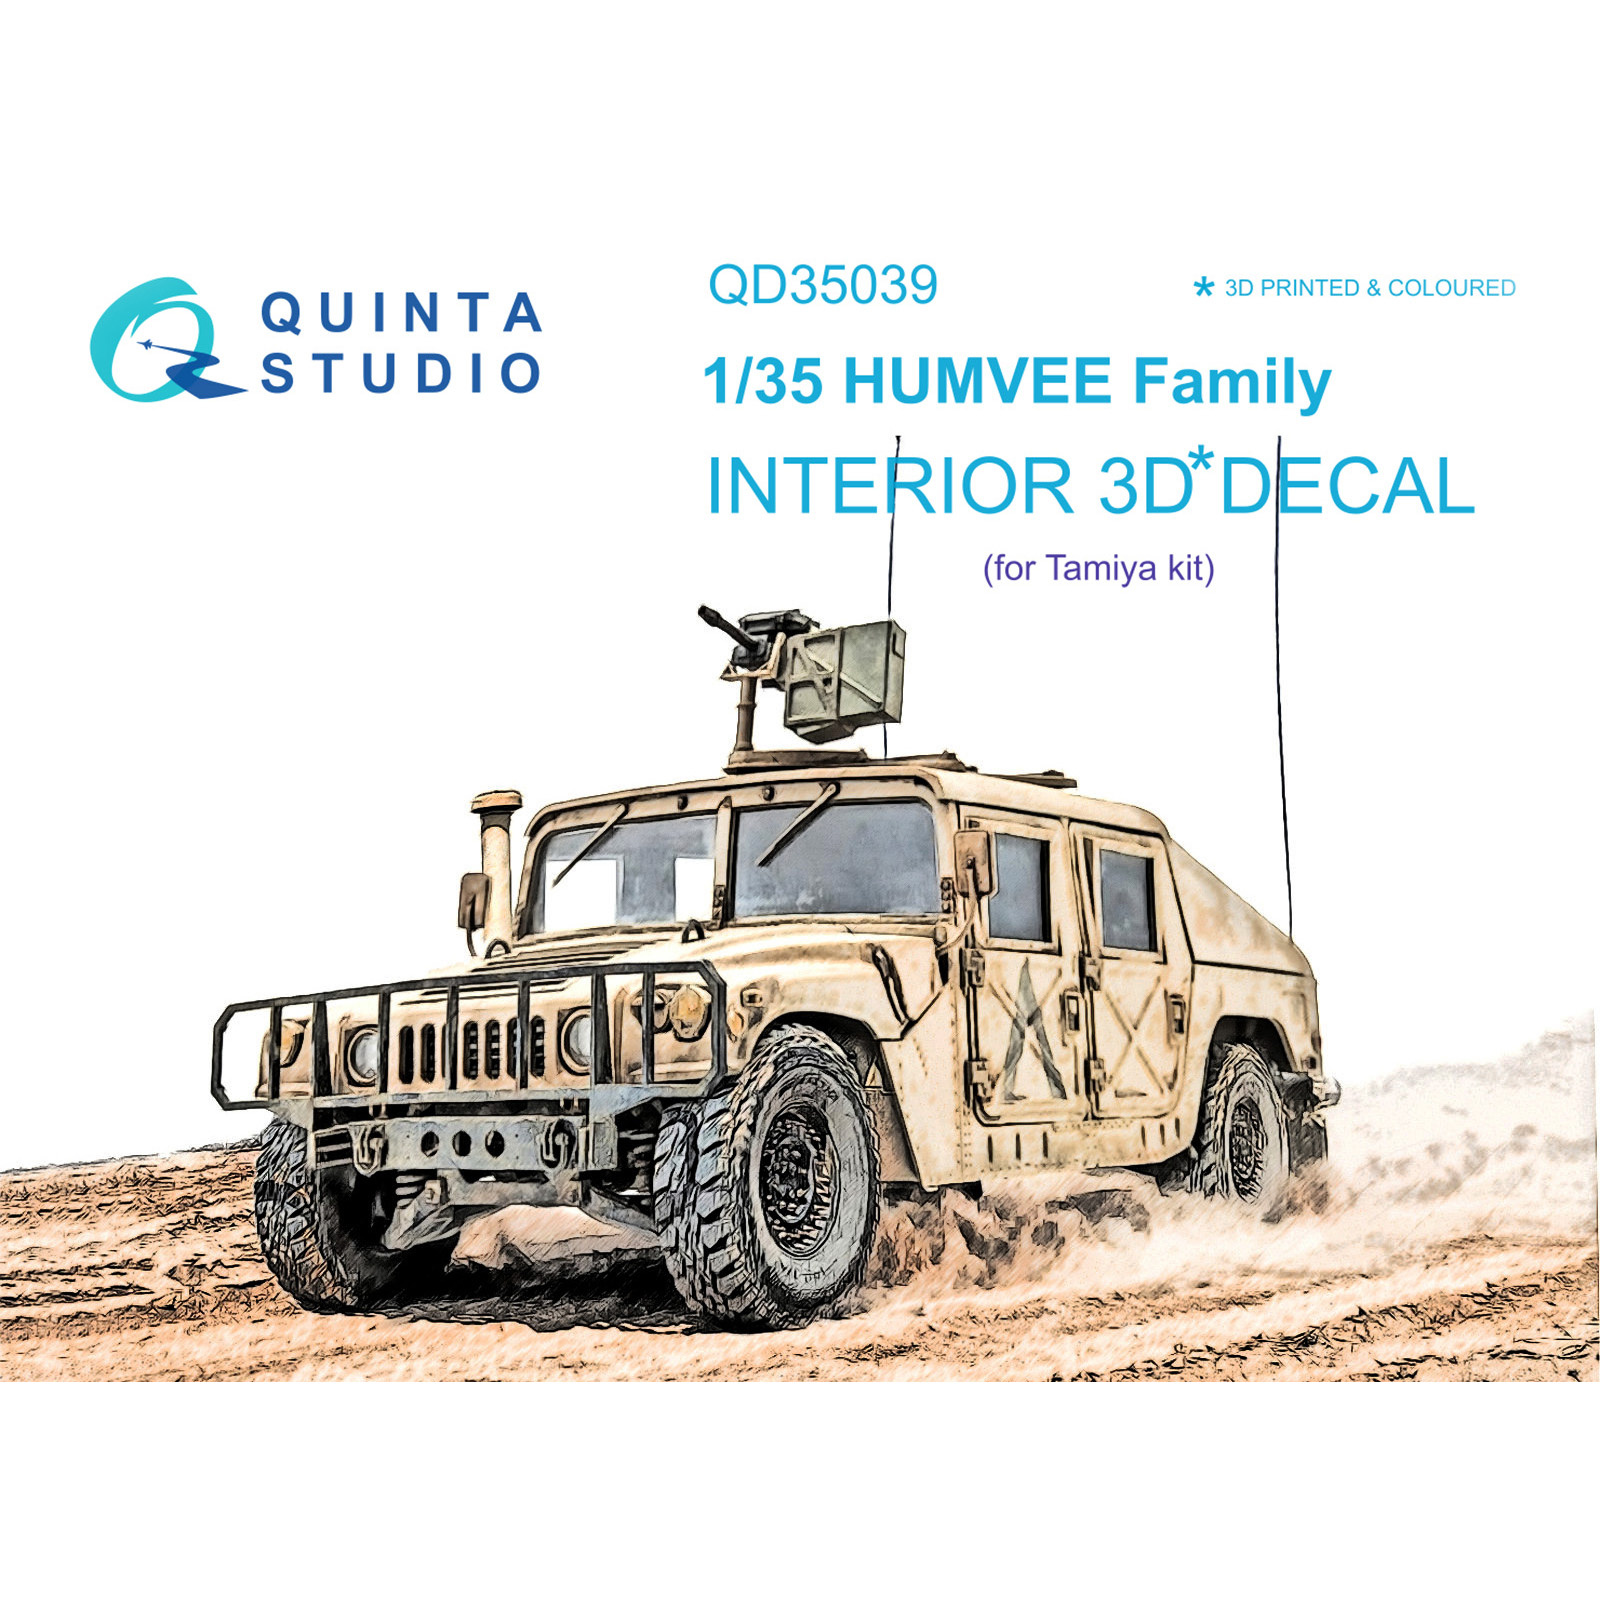 QD35039 Quinta Studio 1/35 3D Cabin Interior Decal for HUMVEE family (Tamiya)